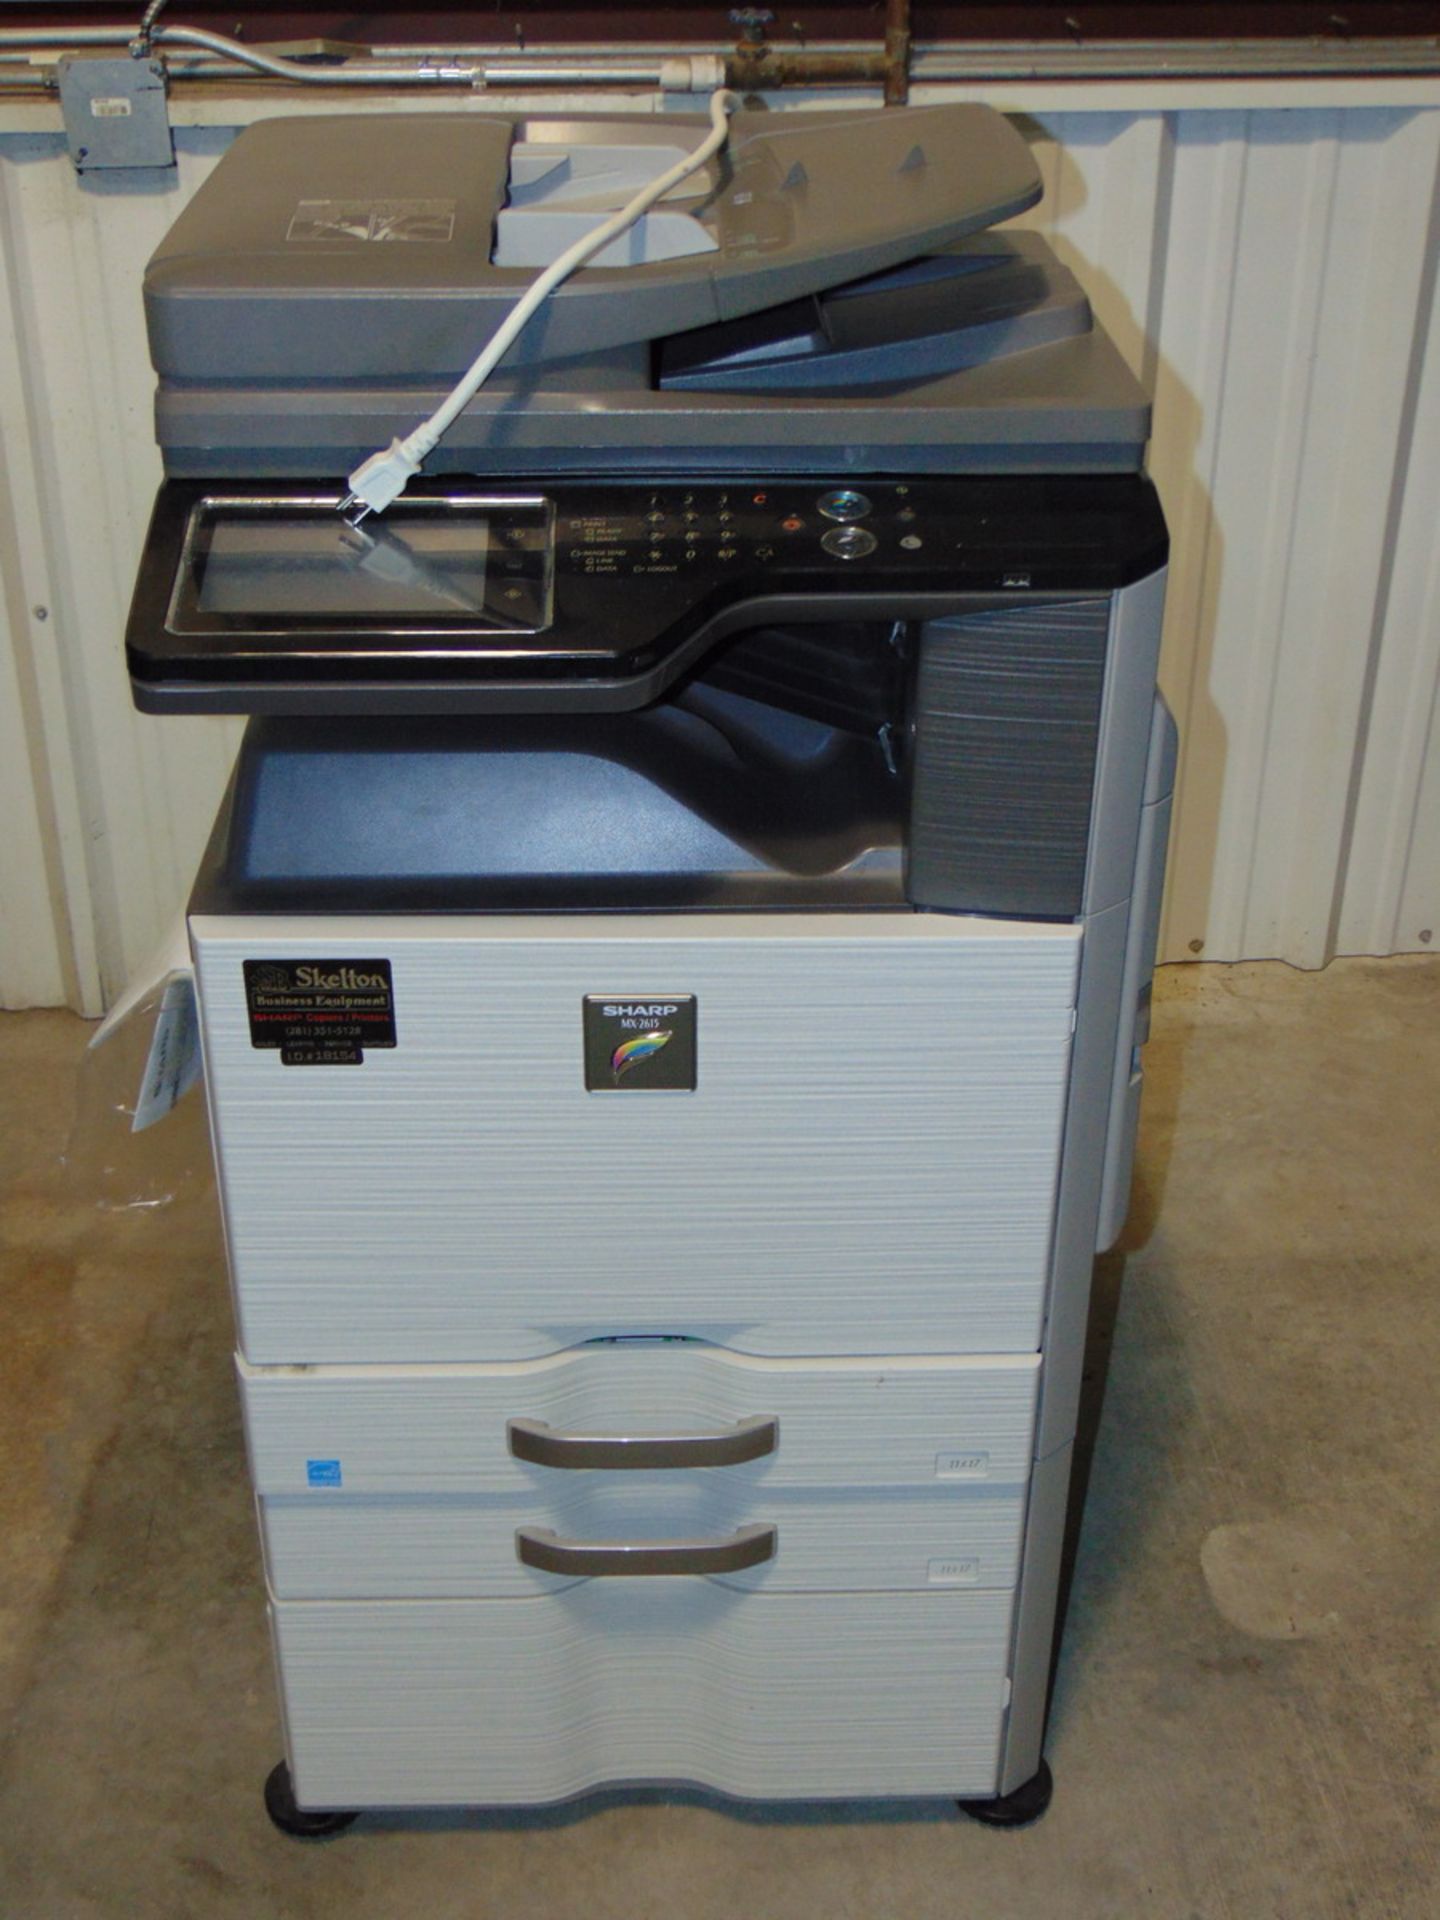 Sharp MX-2615N Multifunction Color Printer / Copier / Scanner